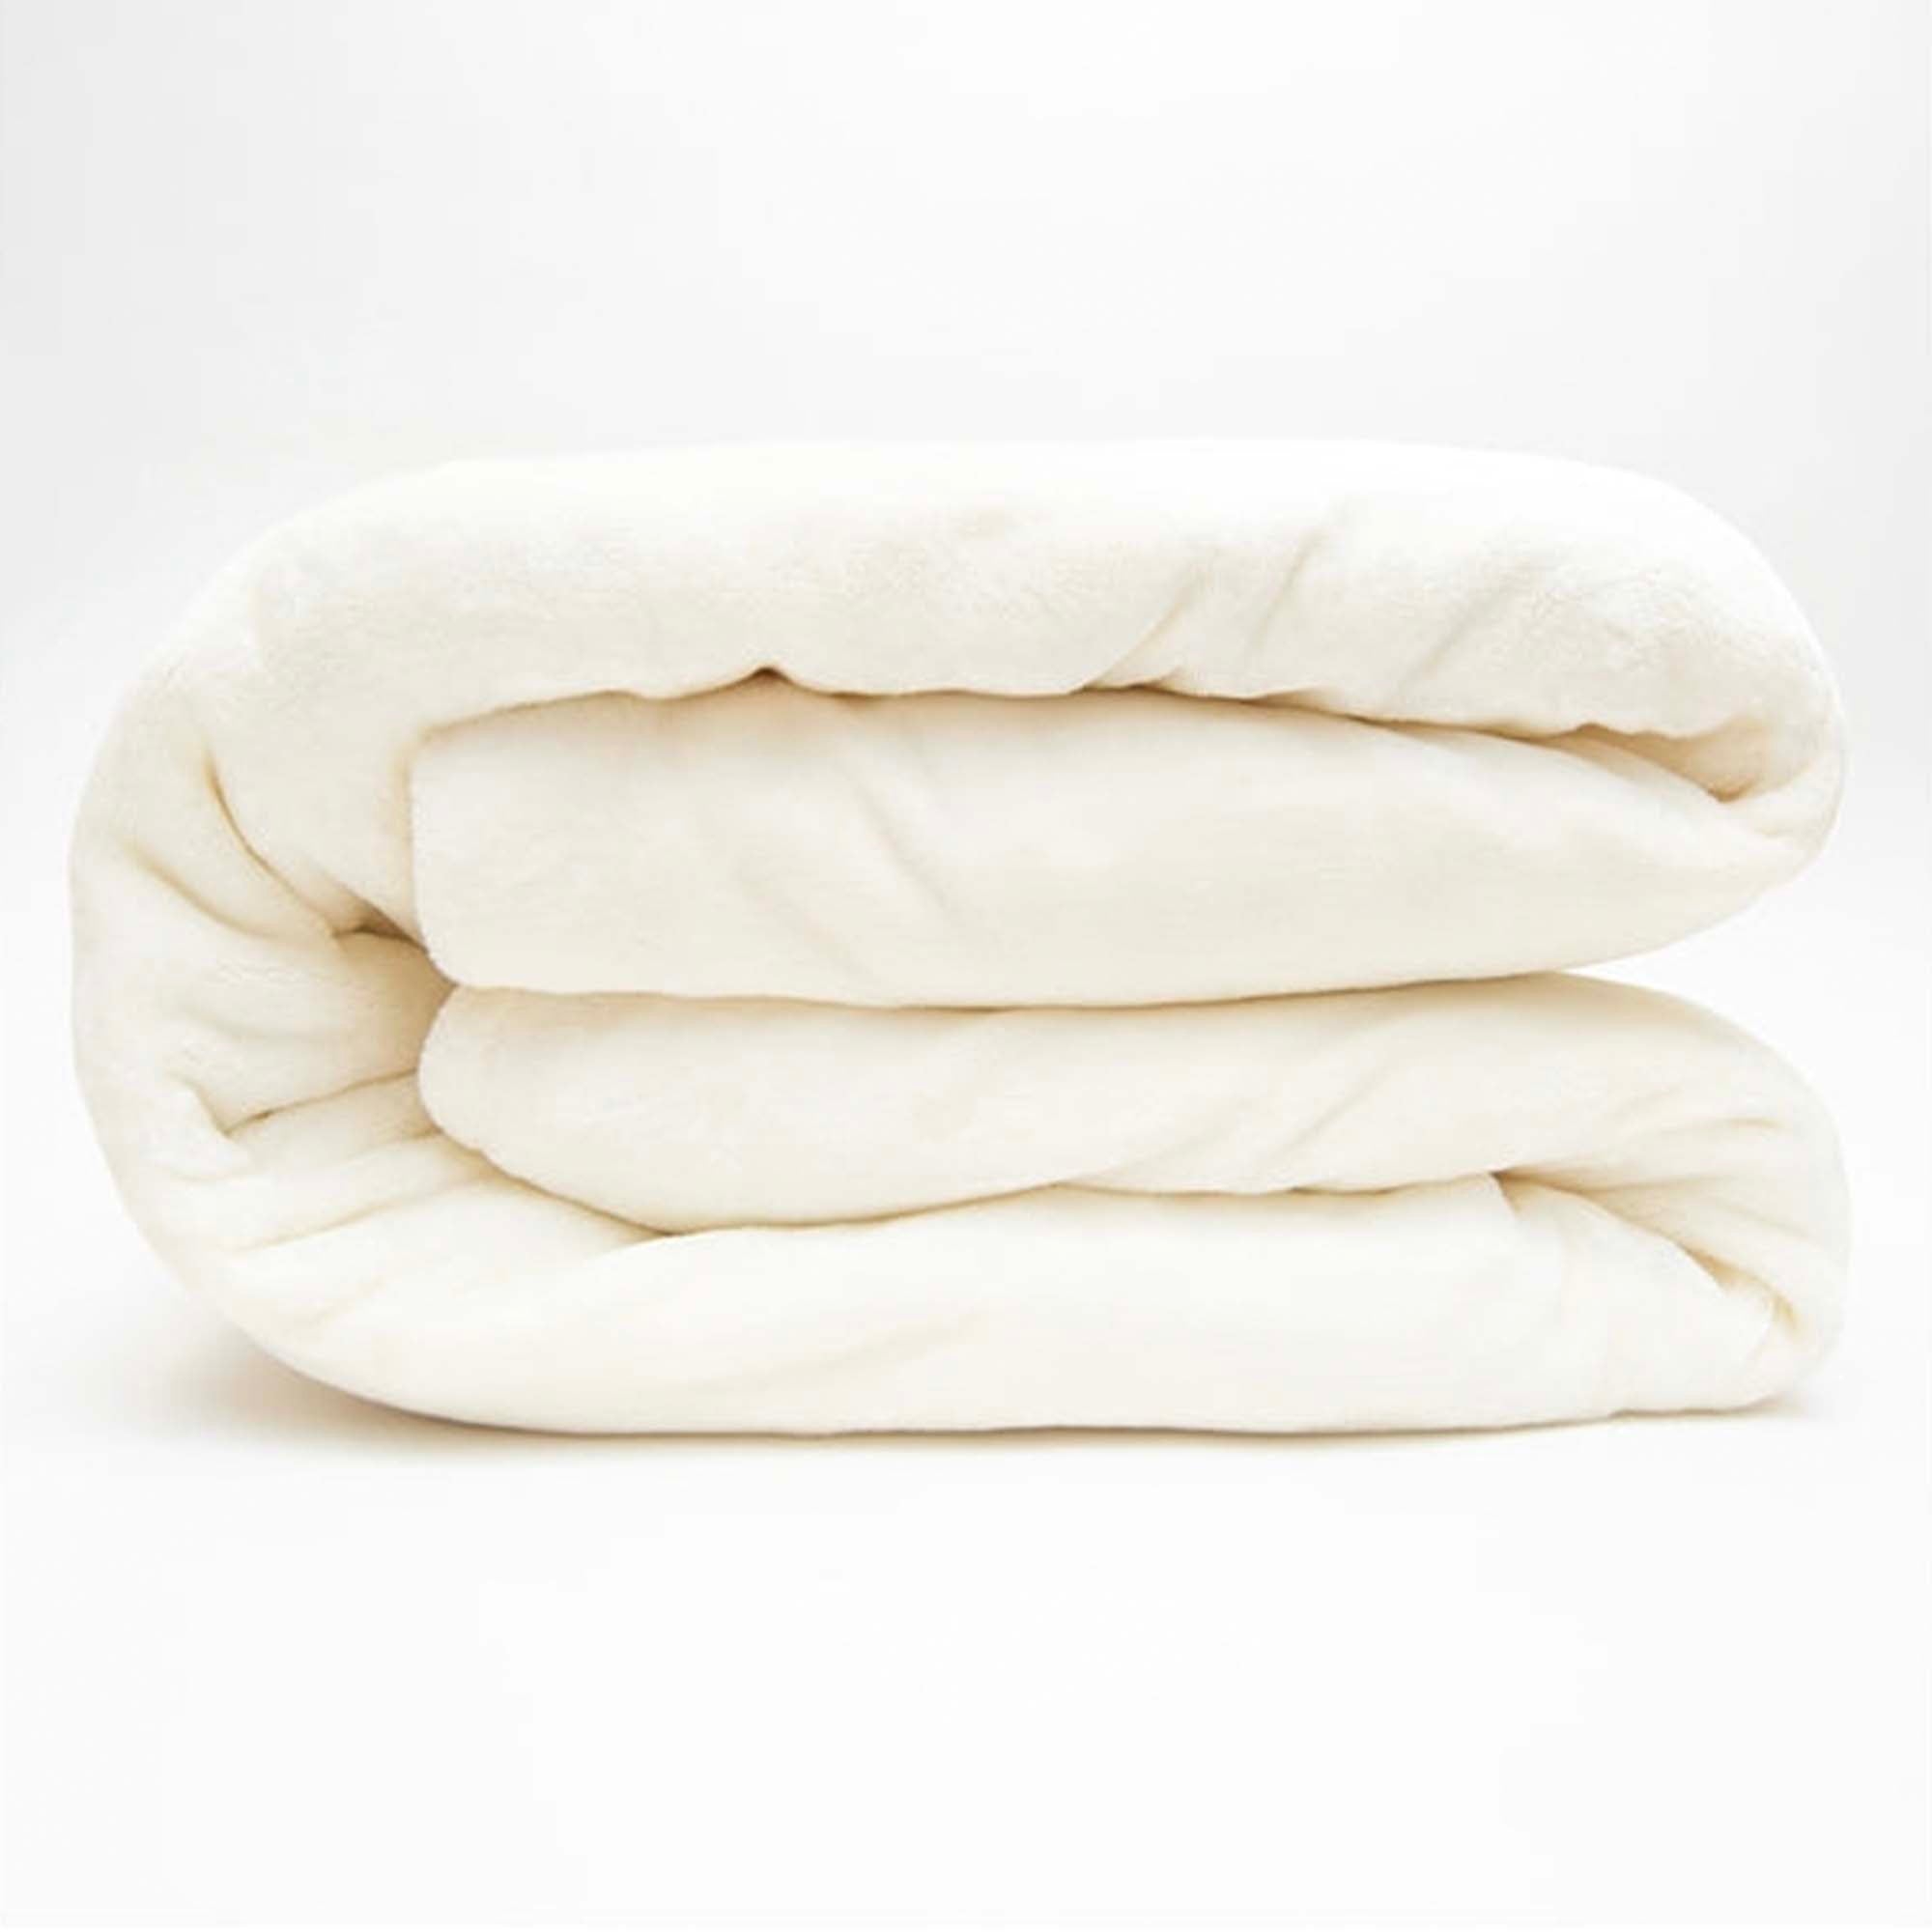 Custom Size Luster Loft Fleece Blankets